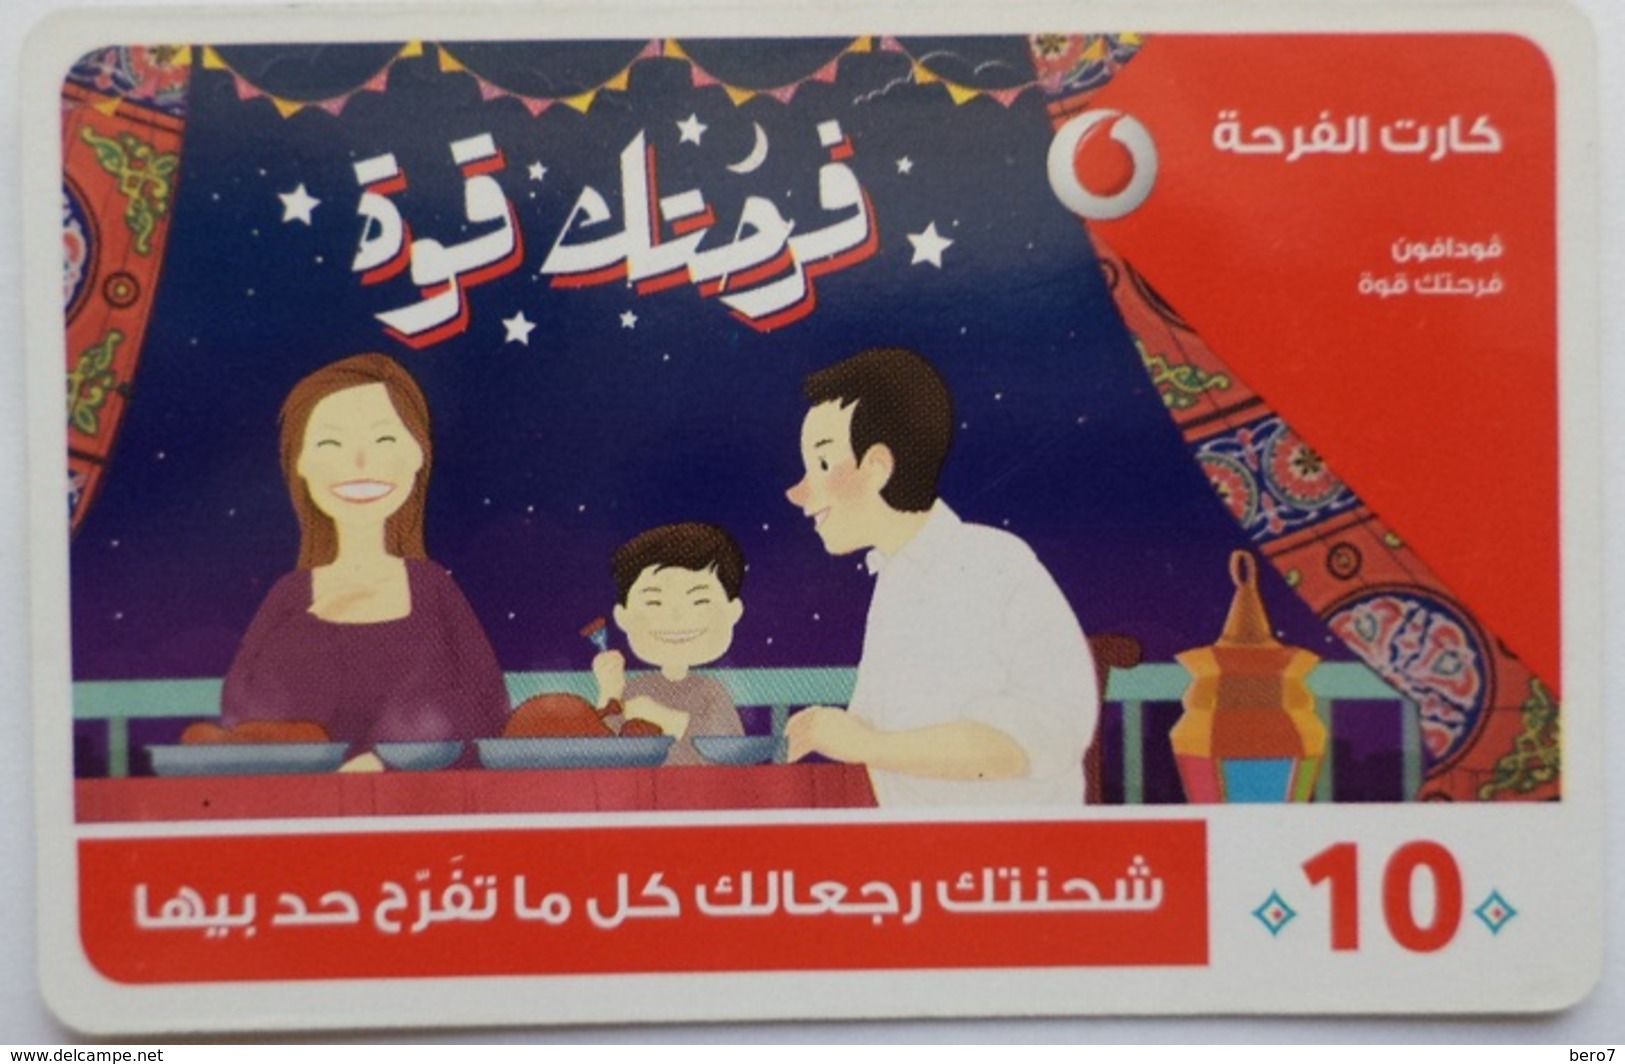 EGYPT - Happiness  Card 10 L.E, Vodafone , [used] (Egypte) (Egitto) (Ägypten) (Egipto) (Egypten) - Egipto